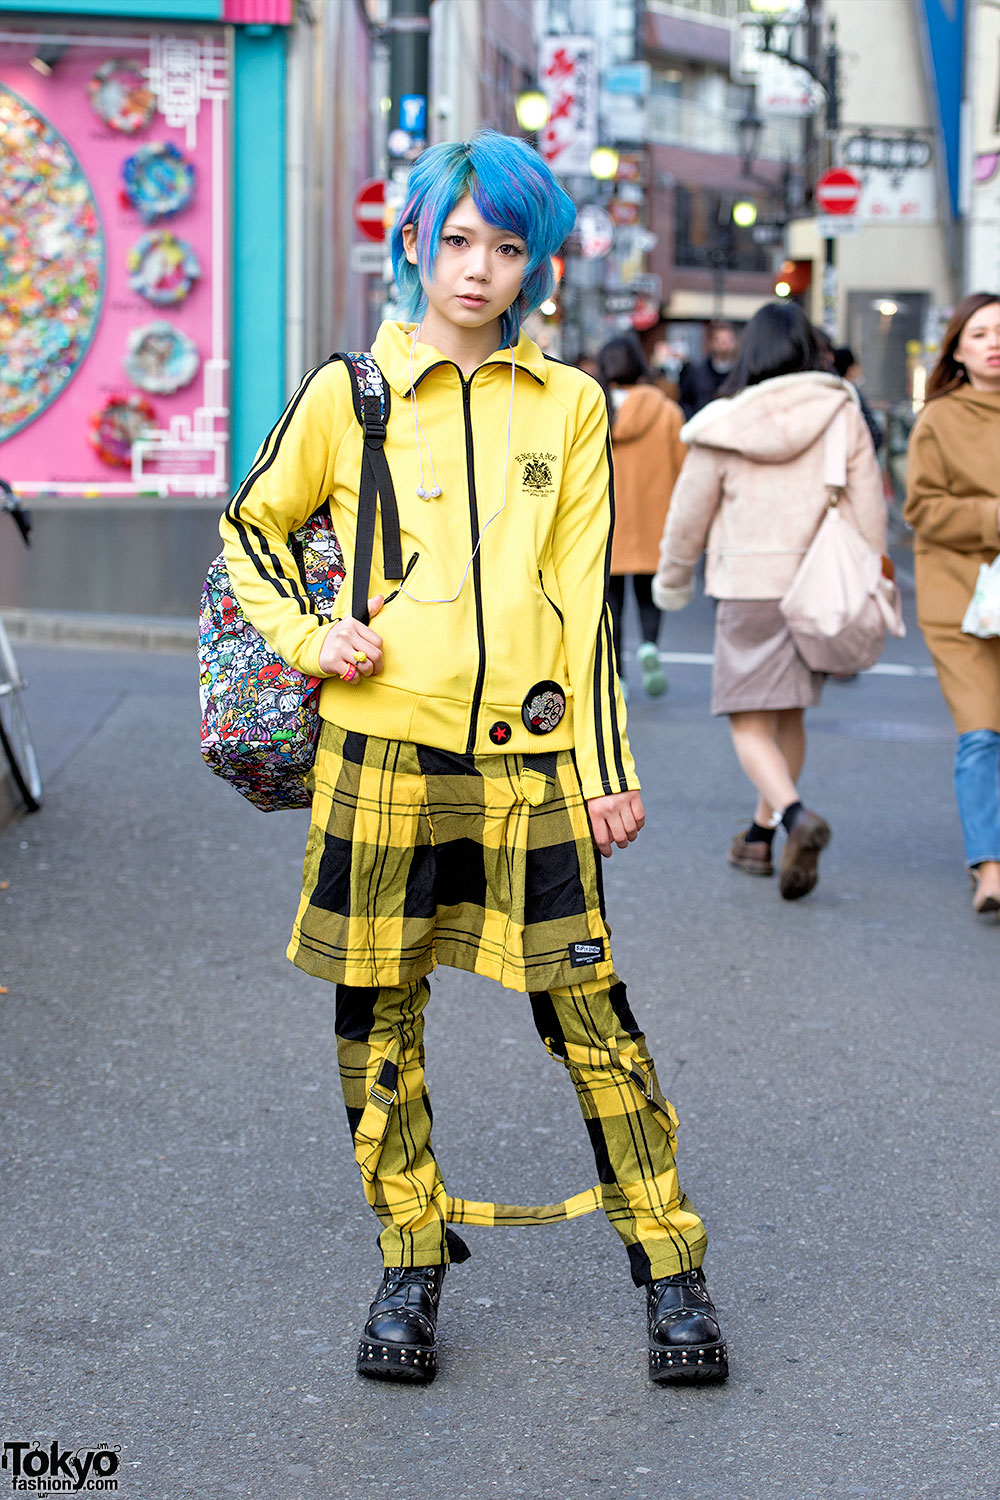 Токийские одежда. Хараджуку Токио стиль. Токийская мода улиц Харадзюку. Японский уличный стиль Харадзюку. Стиль Хараджуку Япония.